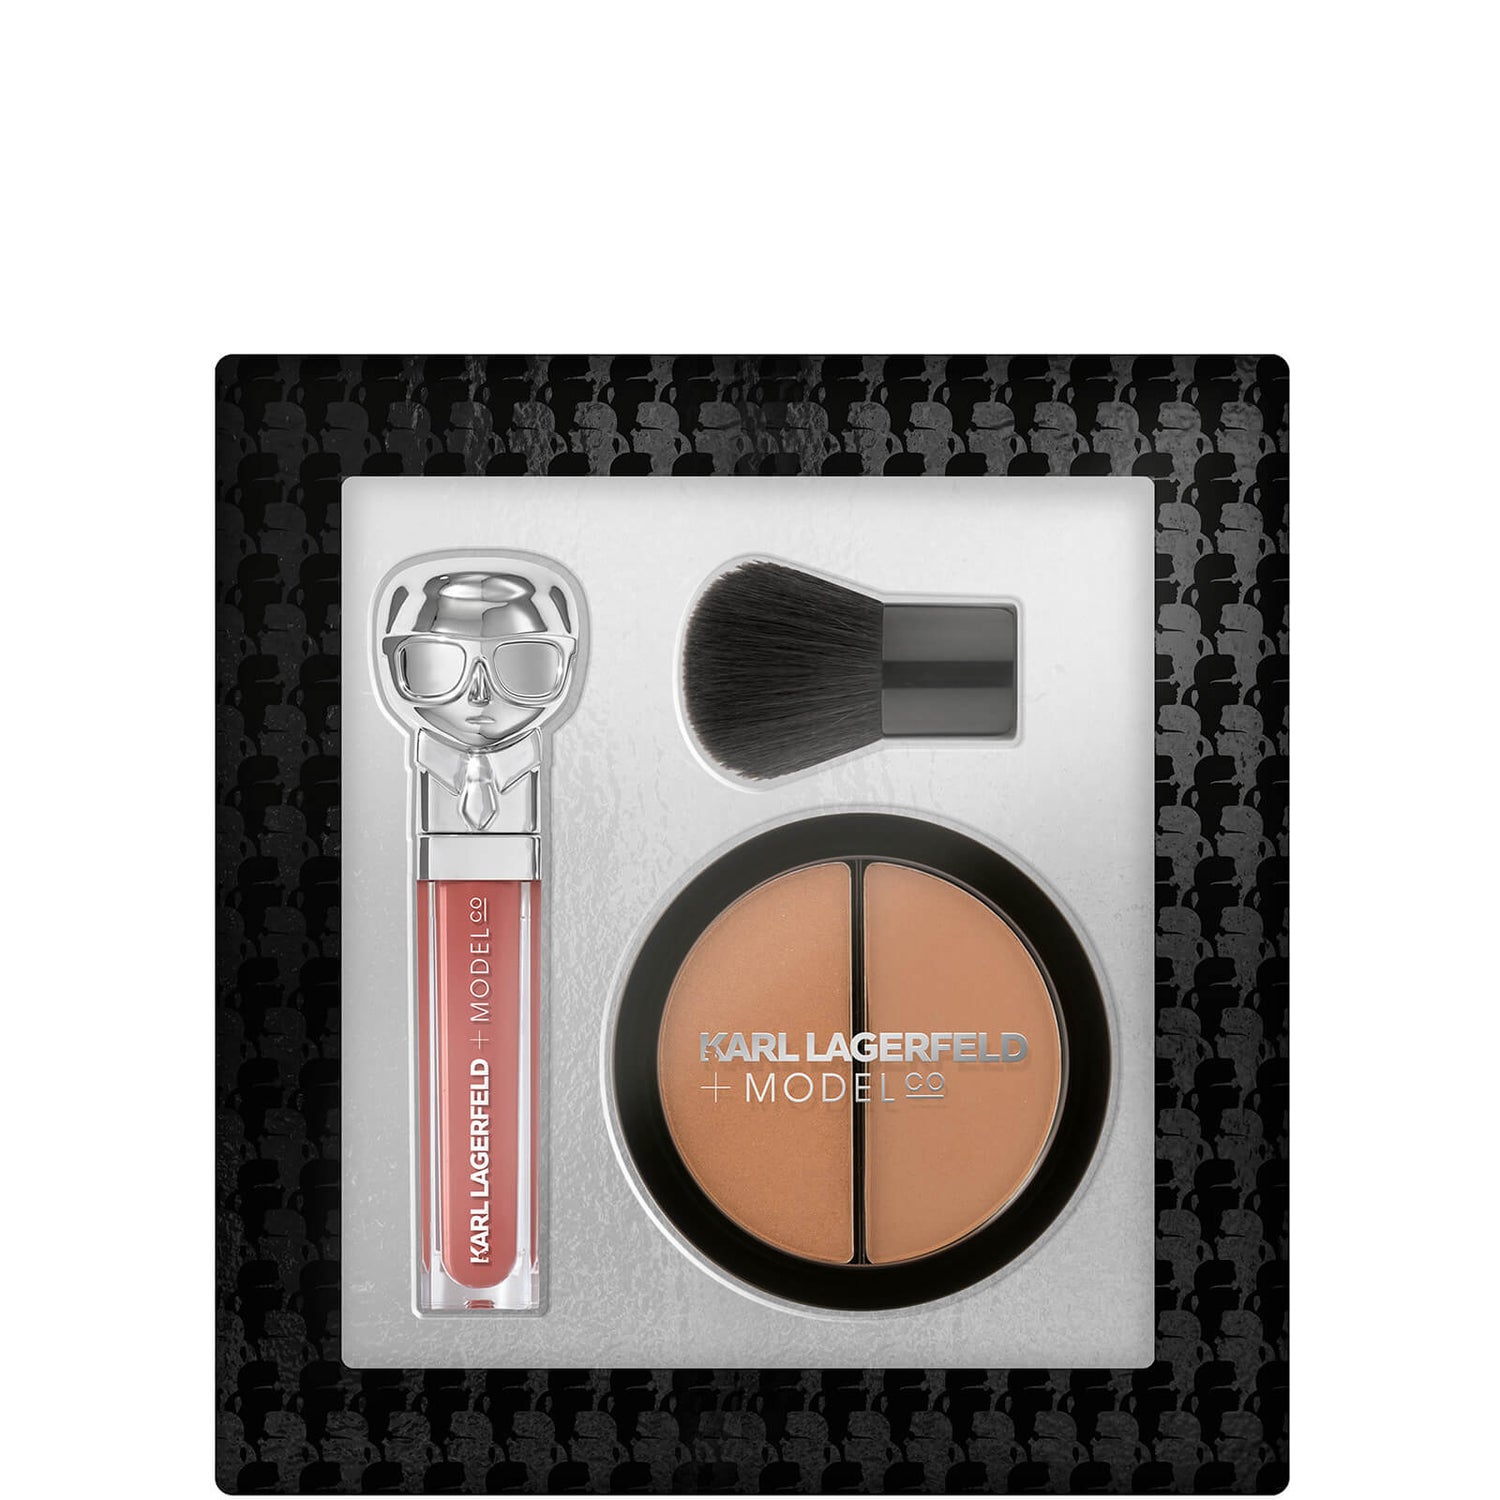 KARL LAGERFELD + MODELCO Luxe Beauty Gift Set